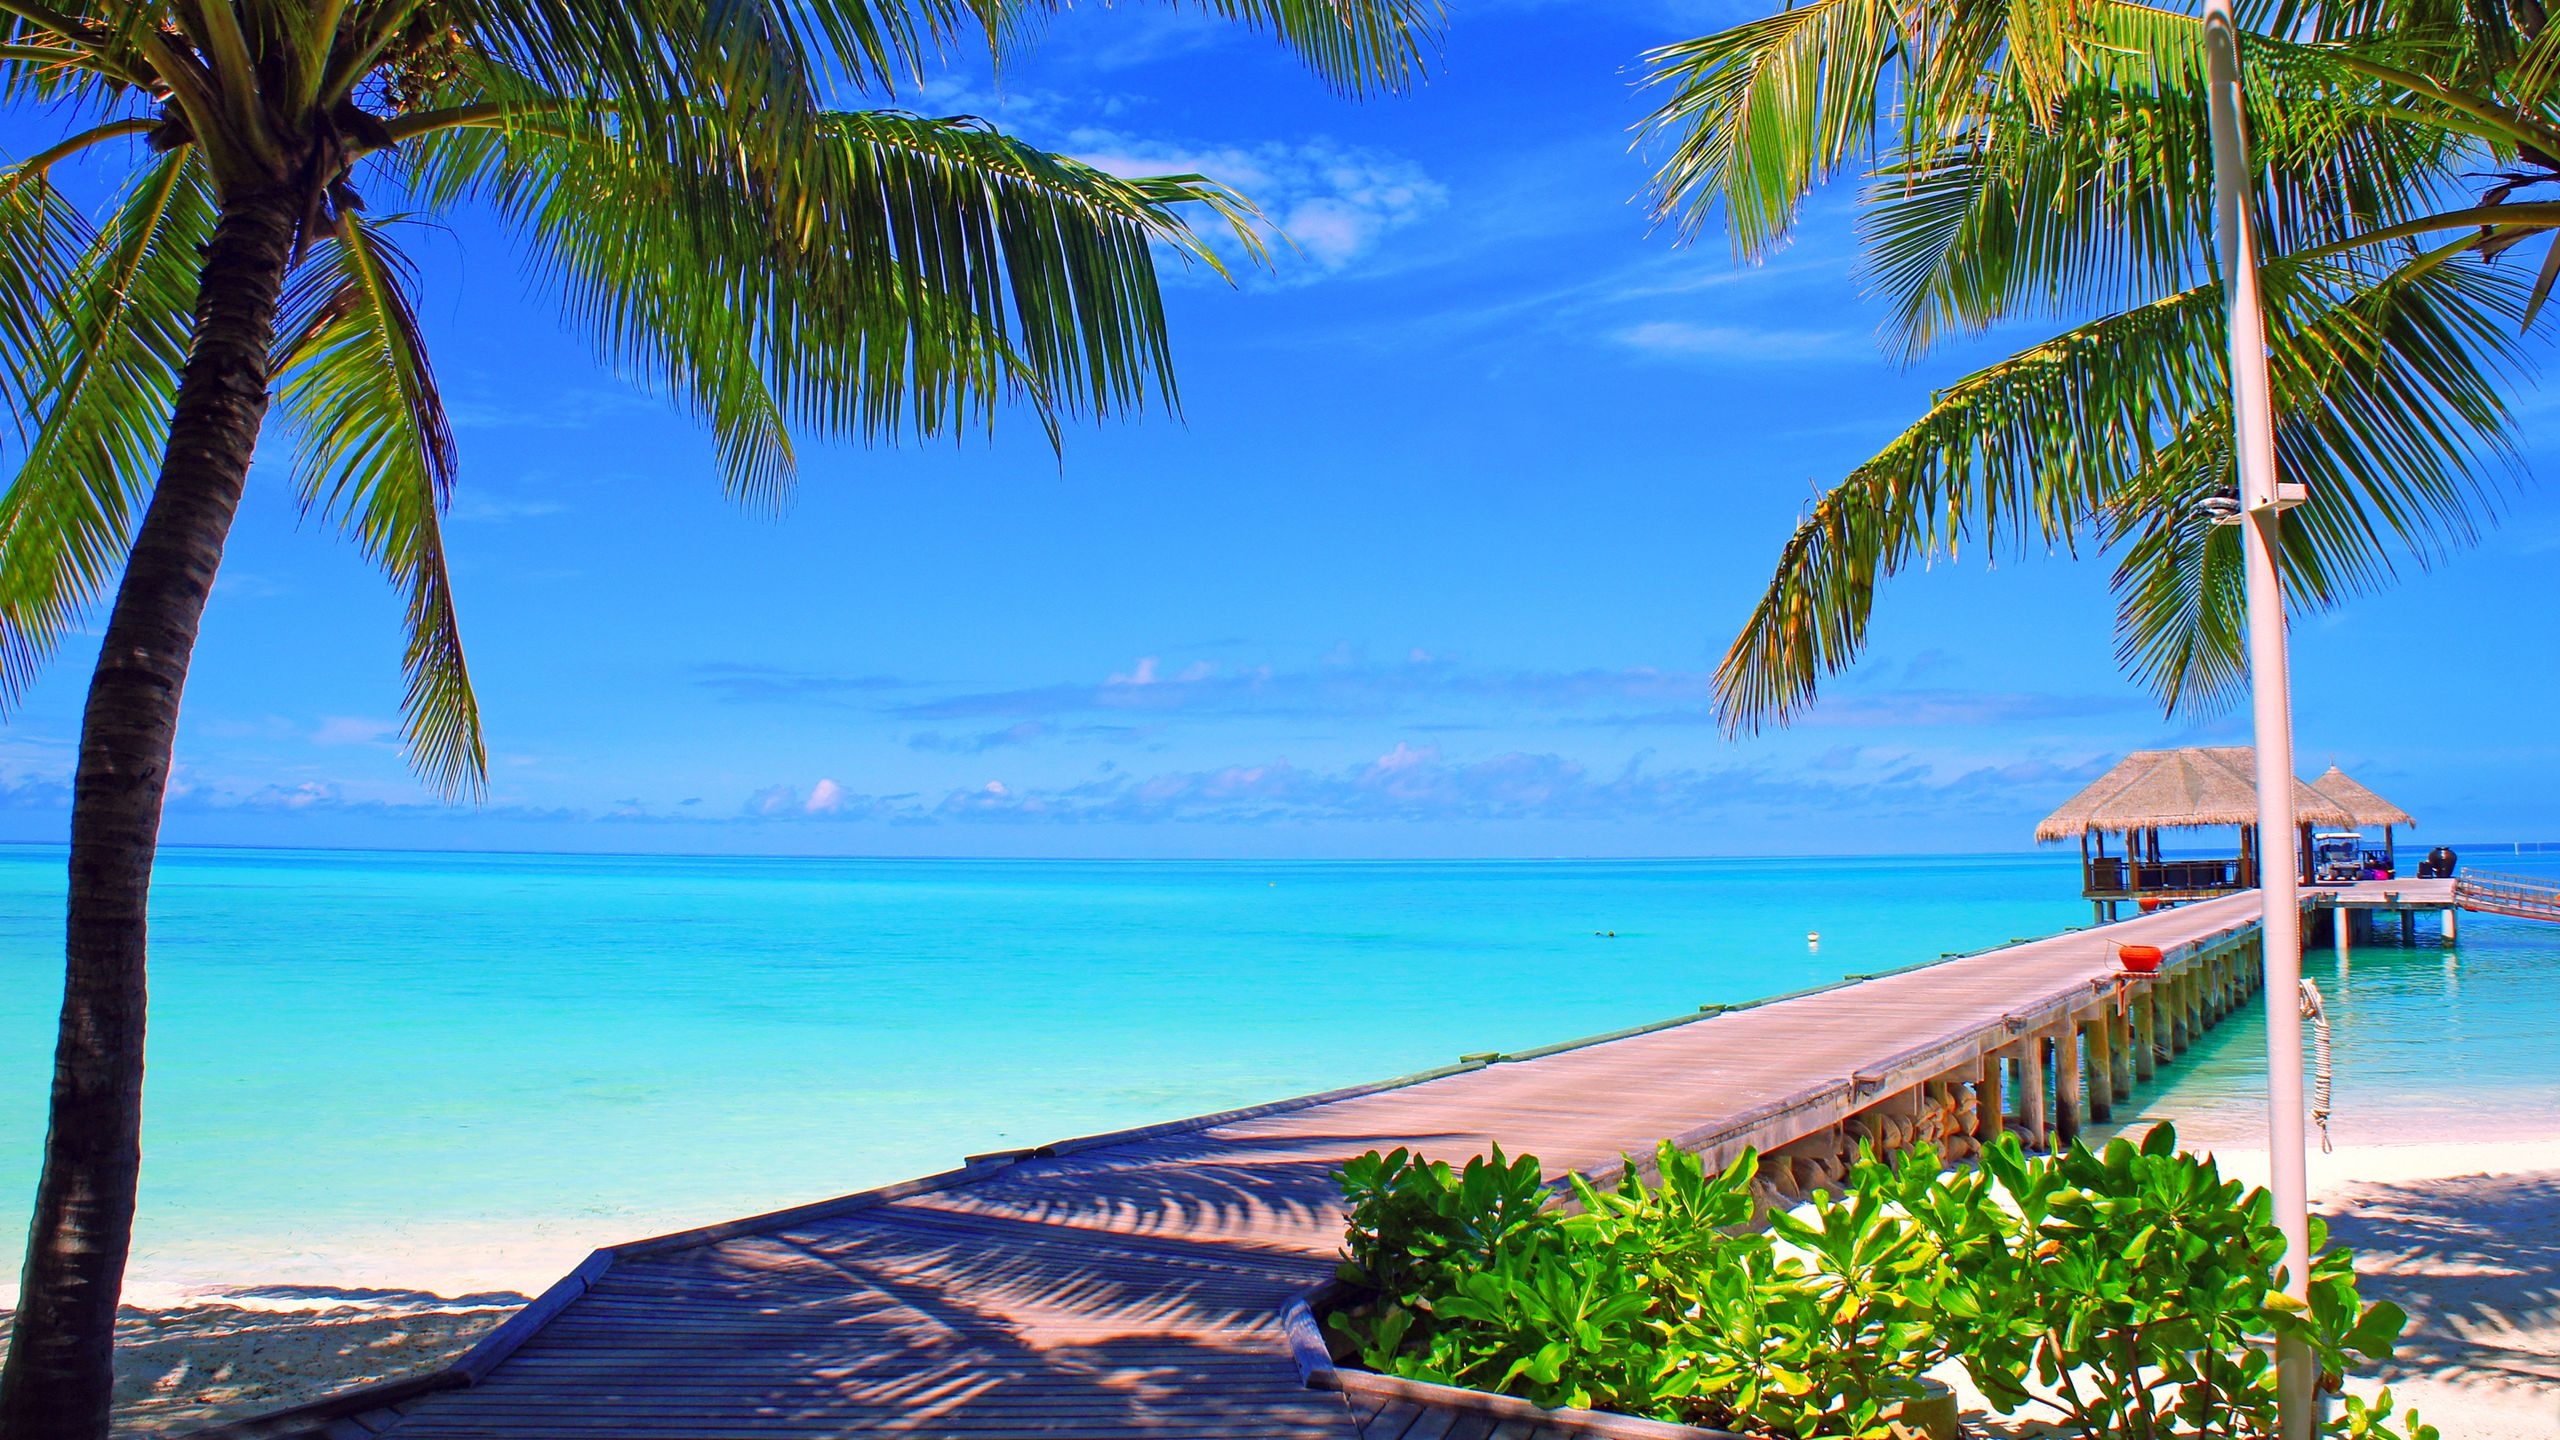 Download Wallpaper 2560x1440 Maldives Sky Clouds Island Palm Trees Bungalows Sea Ocean